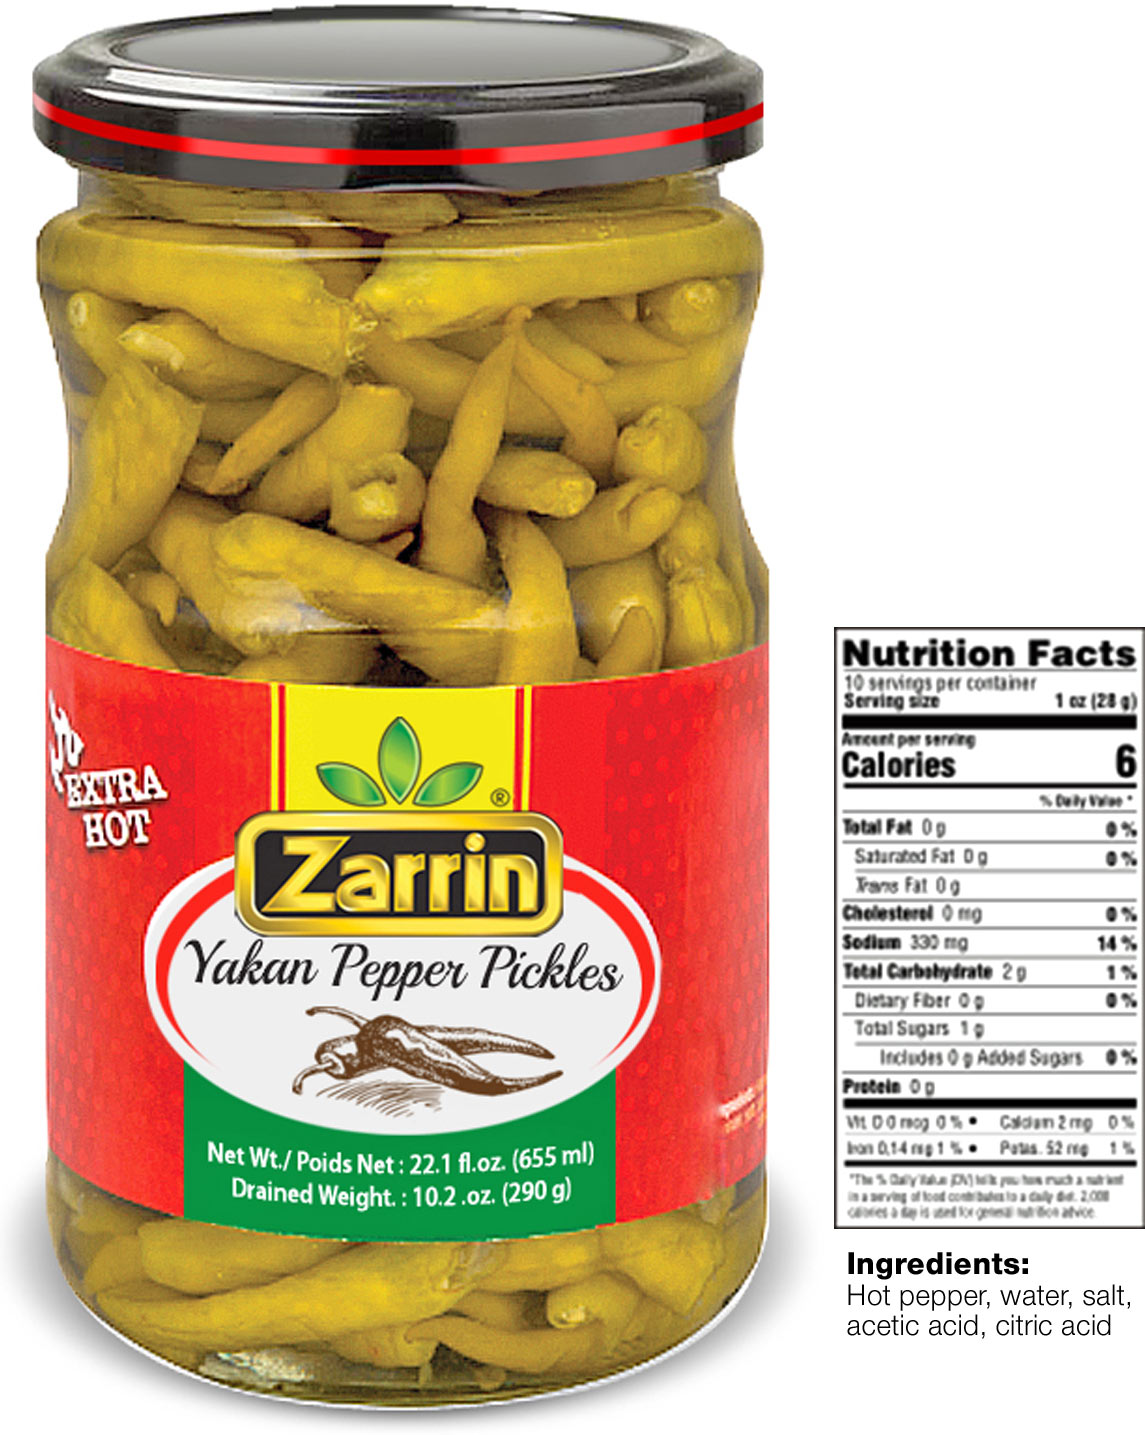 Zarrin hot yakan pepper pickles In 22.1 oz glass jar.